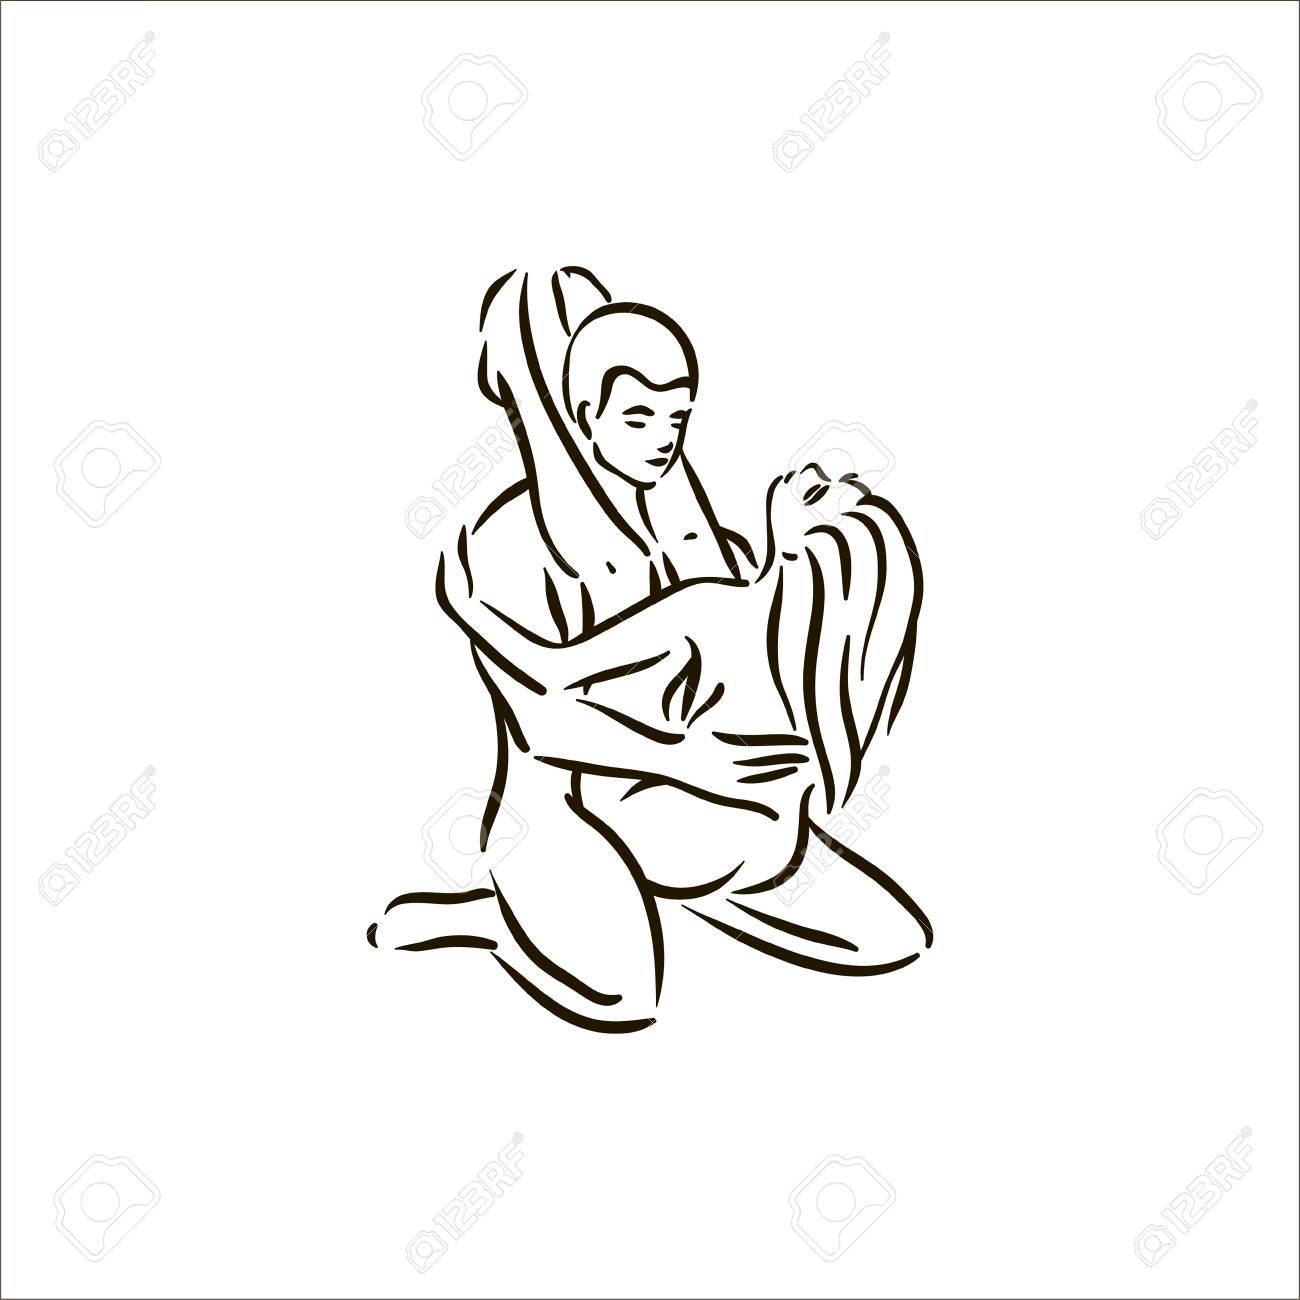 Cartoon kama sutra sex position illustration